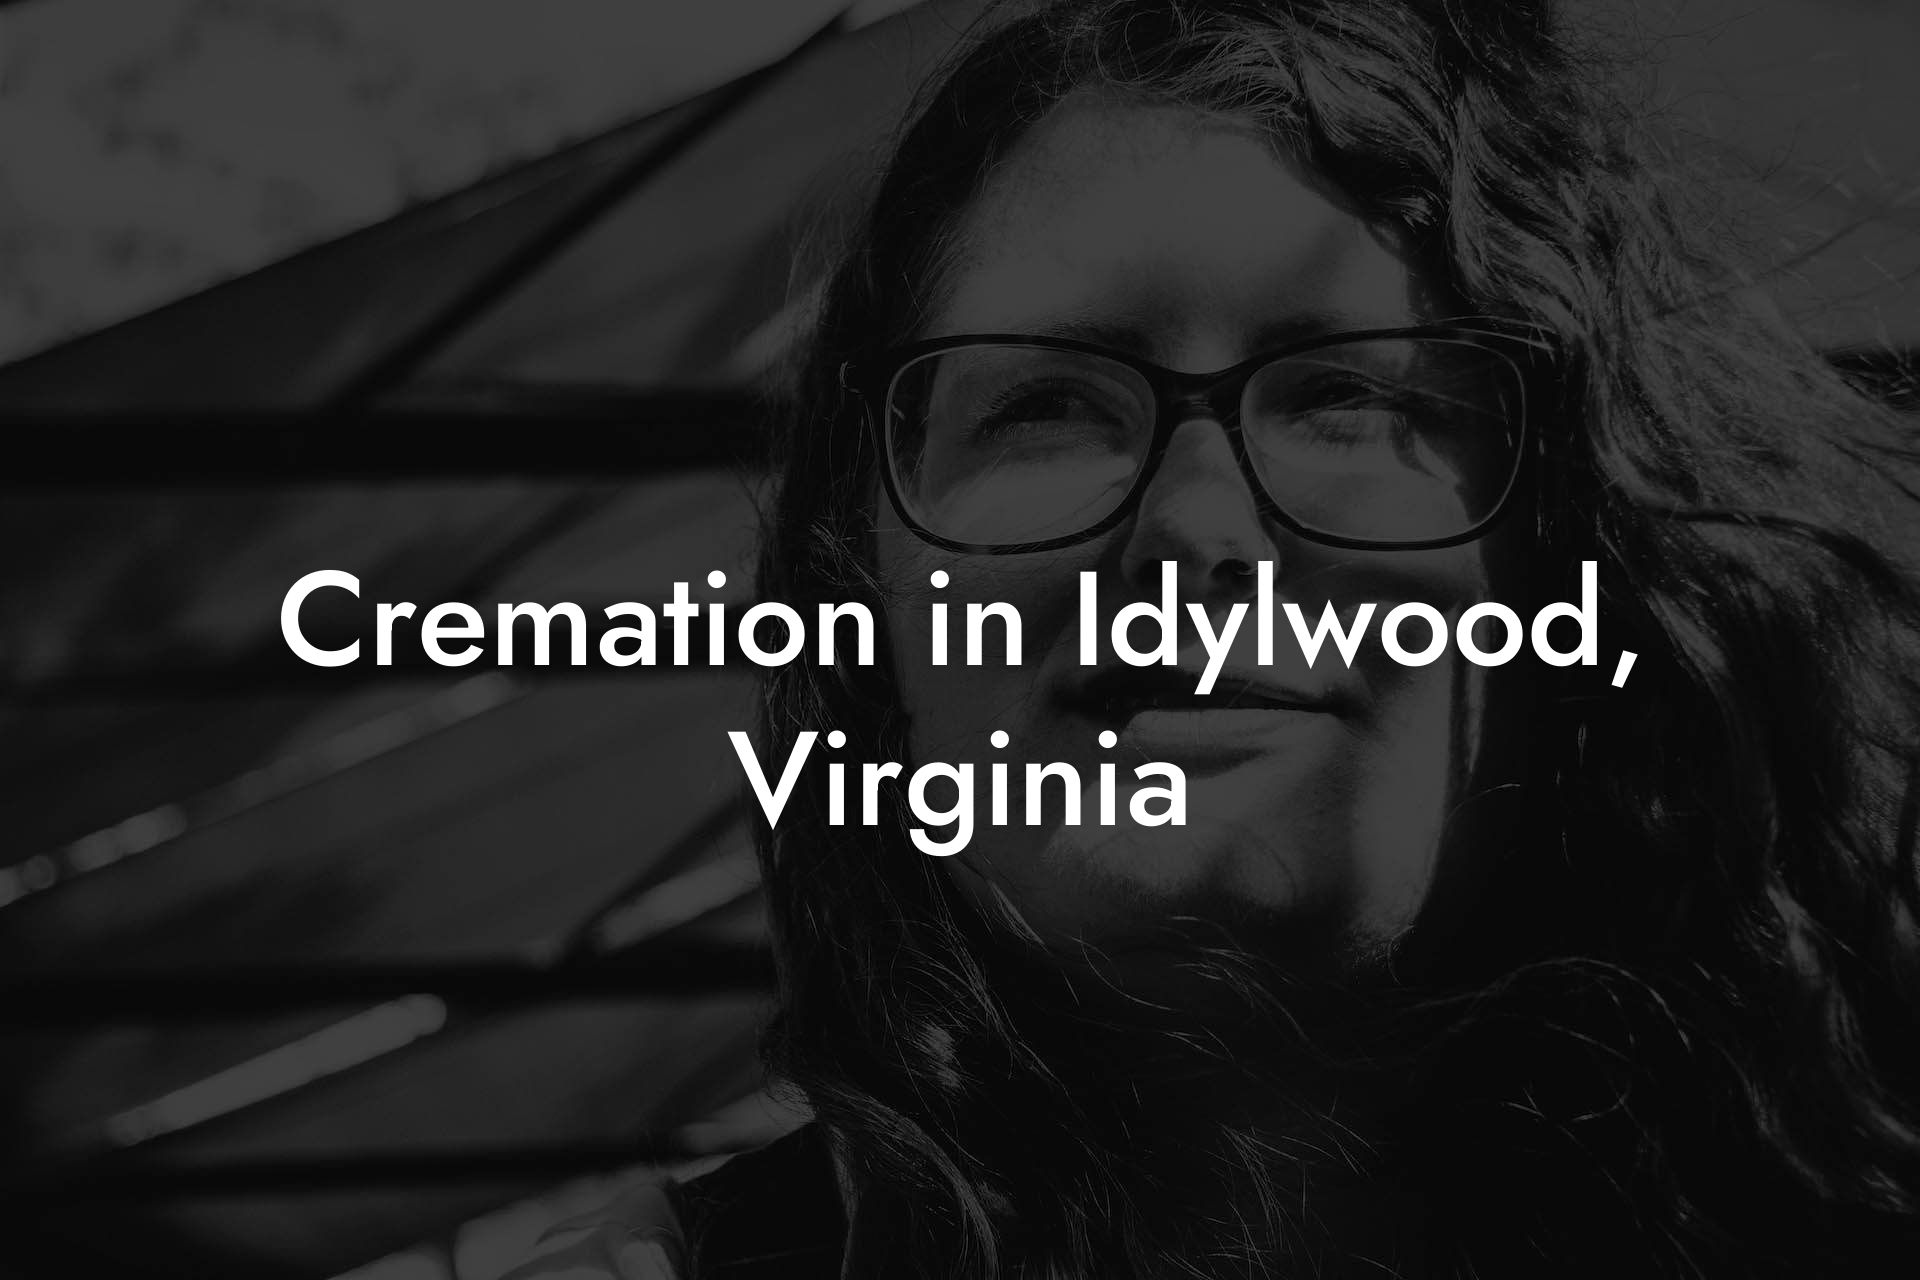 Cremation in Idylwood, Virginia